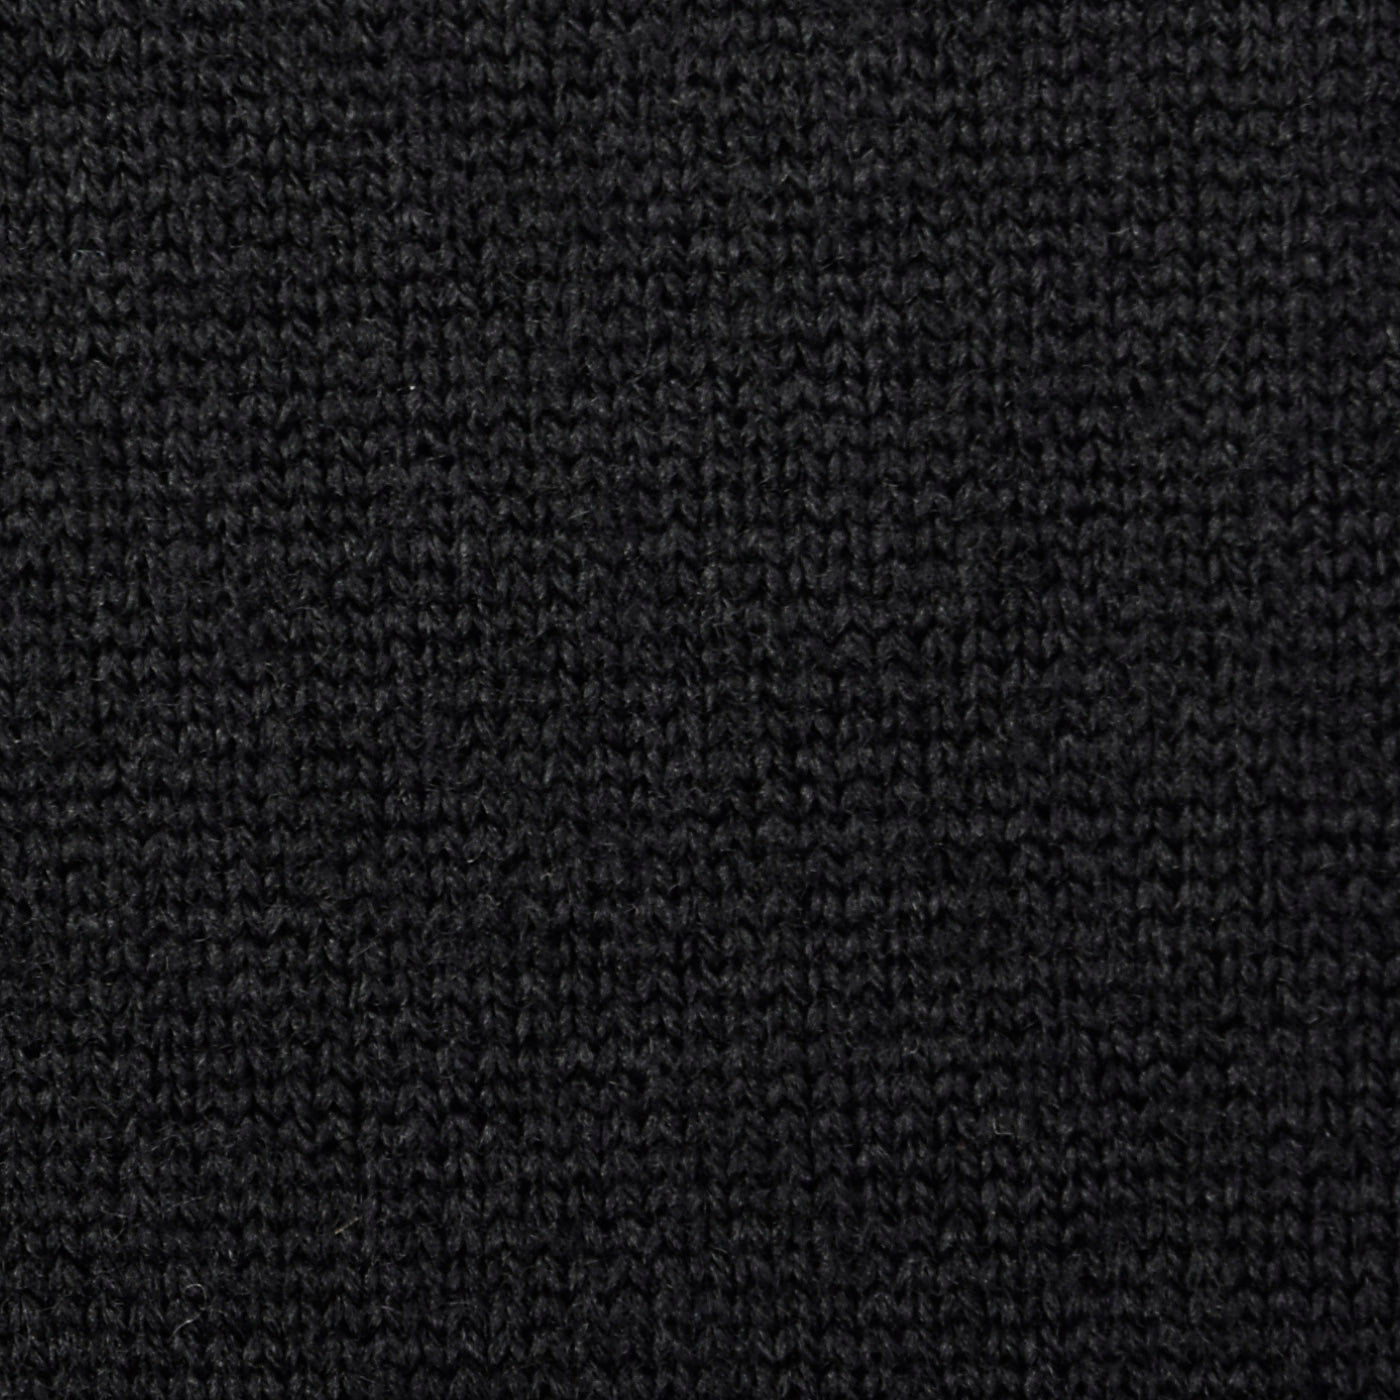 1990s Valentino Studio Black Knit Tunic with Beaded Fringe